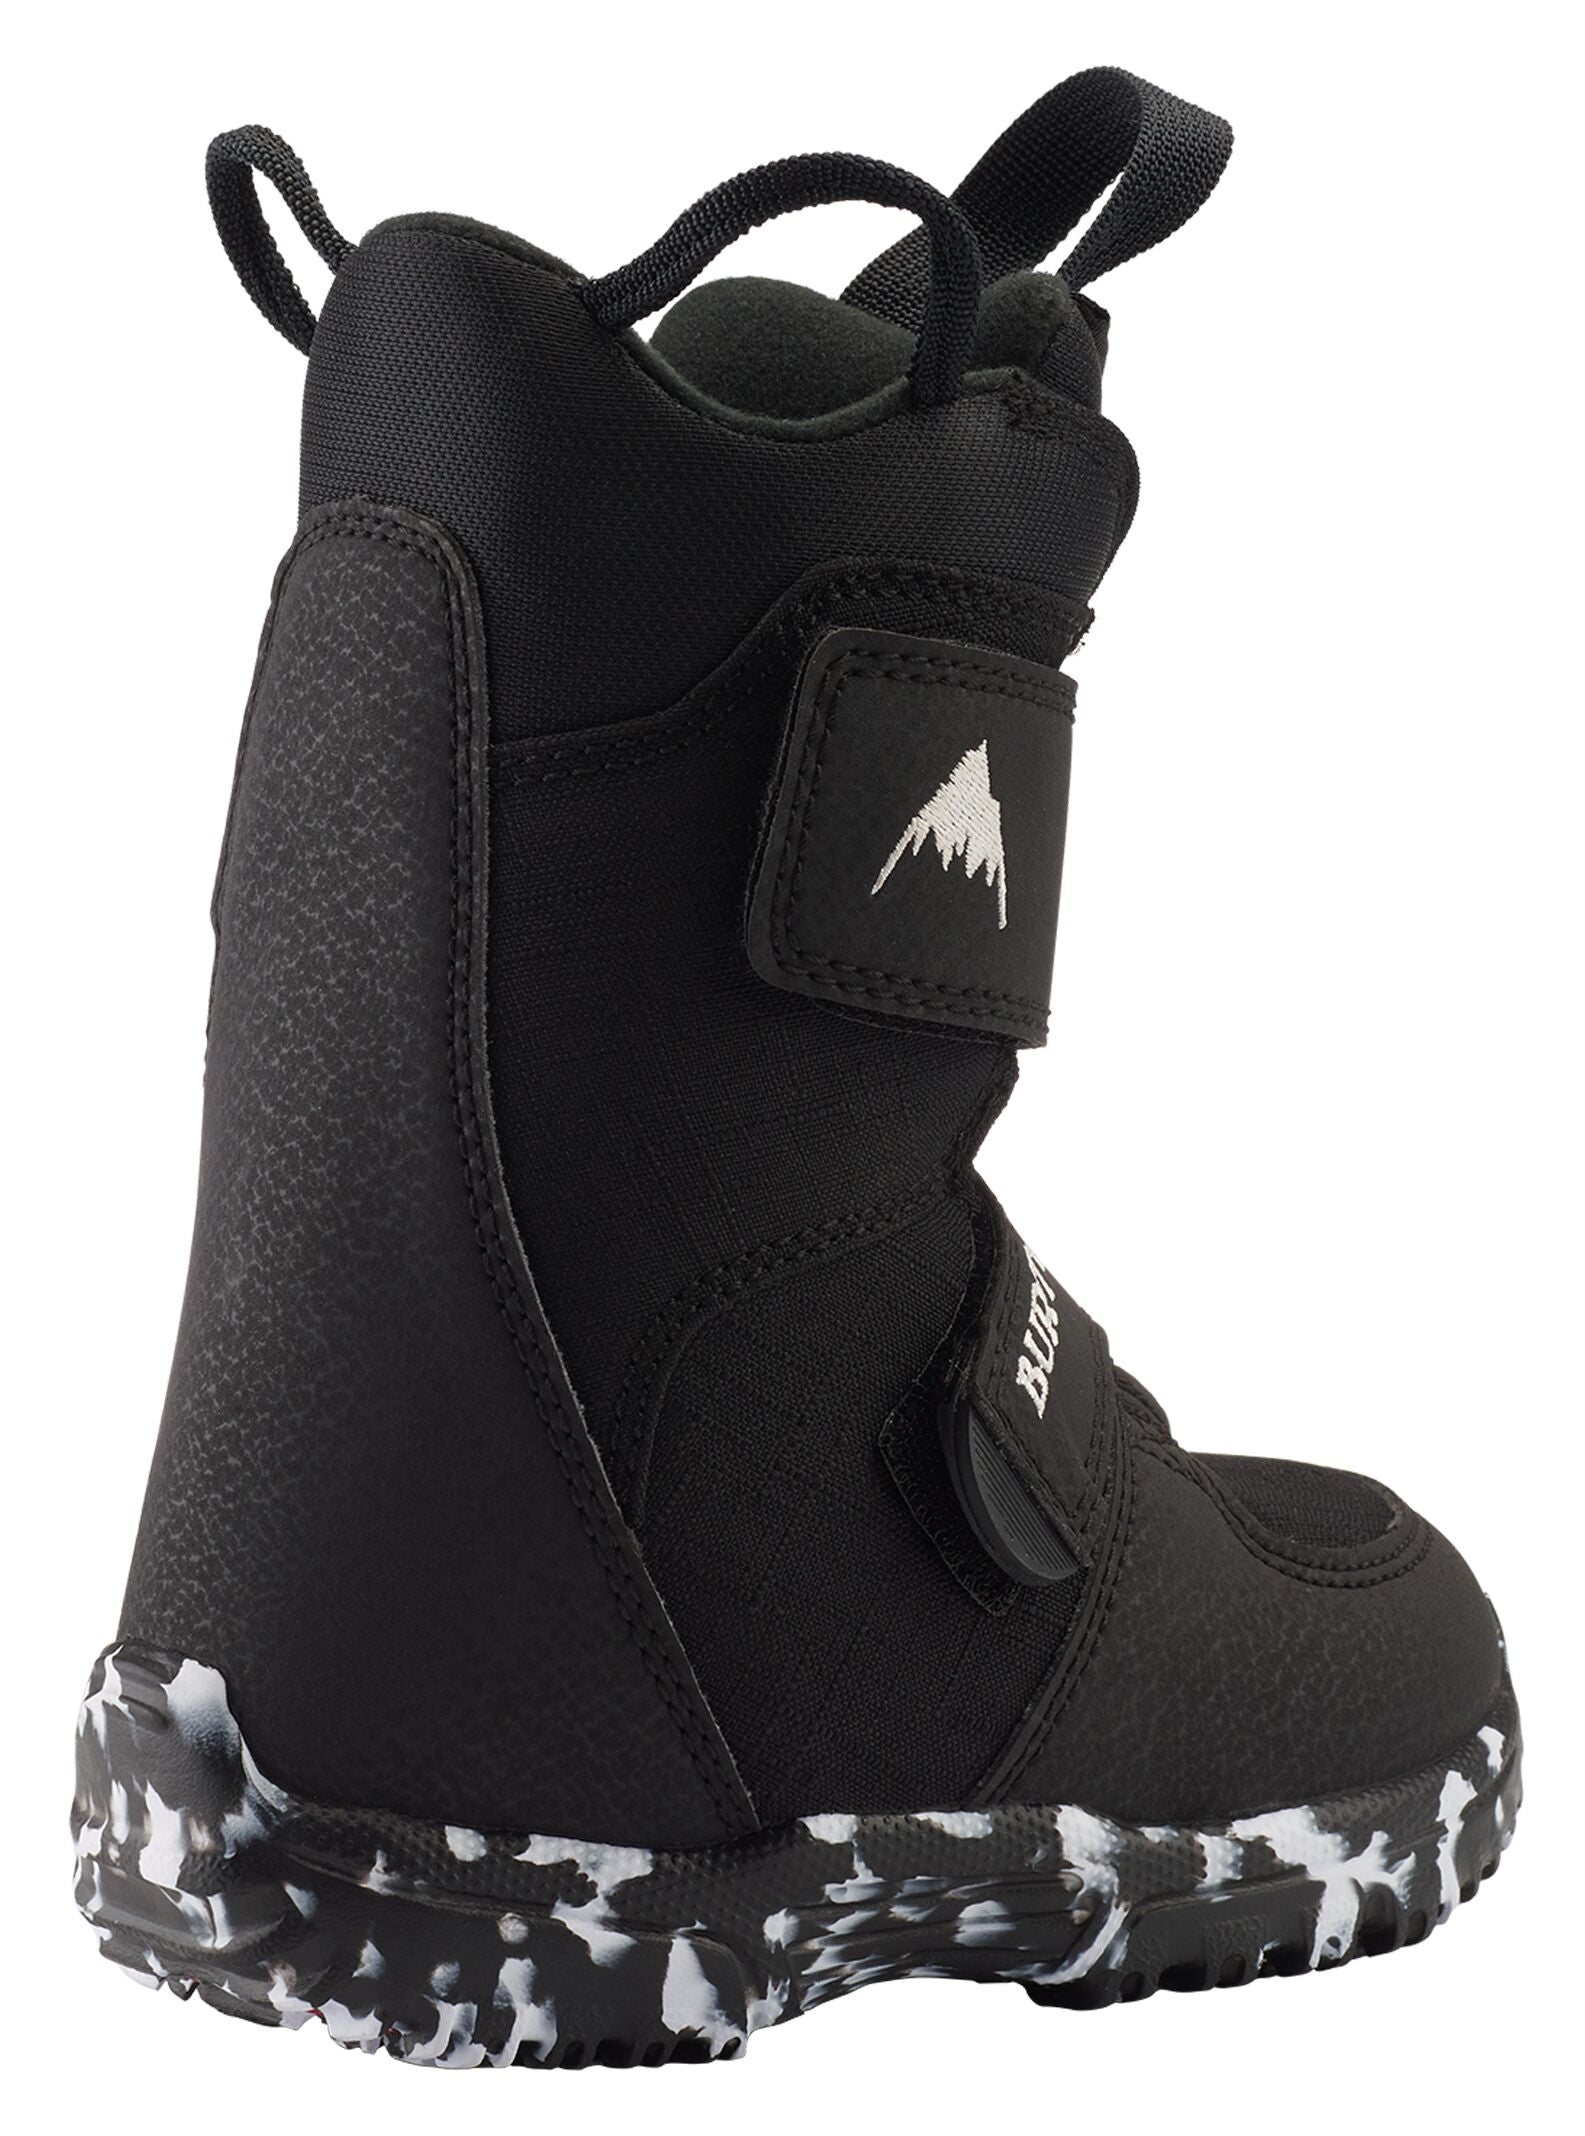 BURTON Mini Grom Snowboard Boots Toddlers Black 2022 Youth Snowboard Boots Burton 11C 